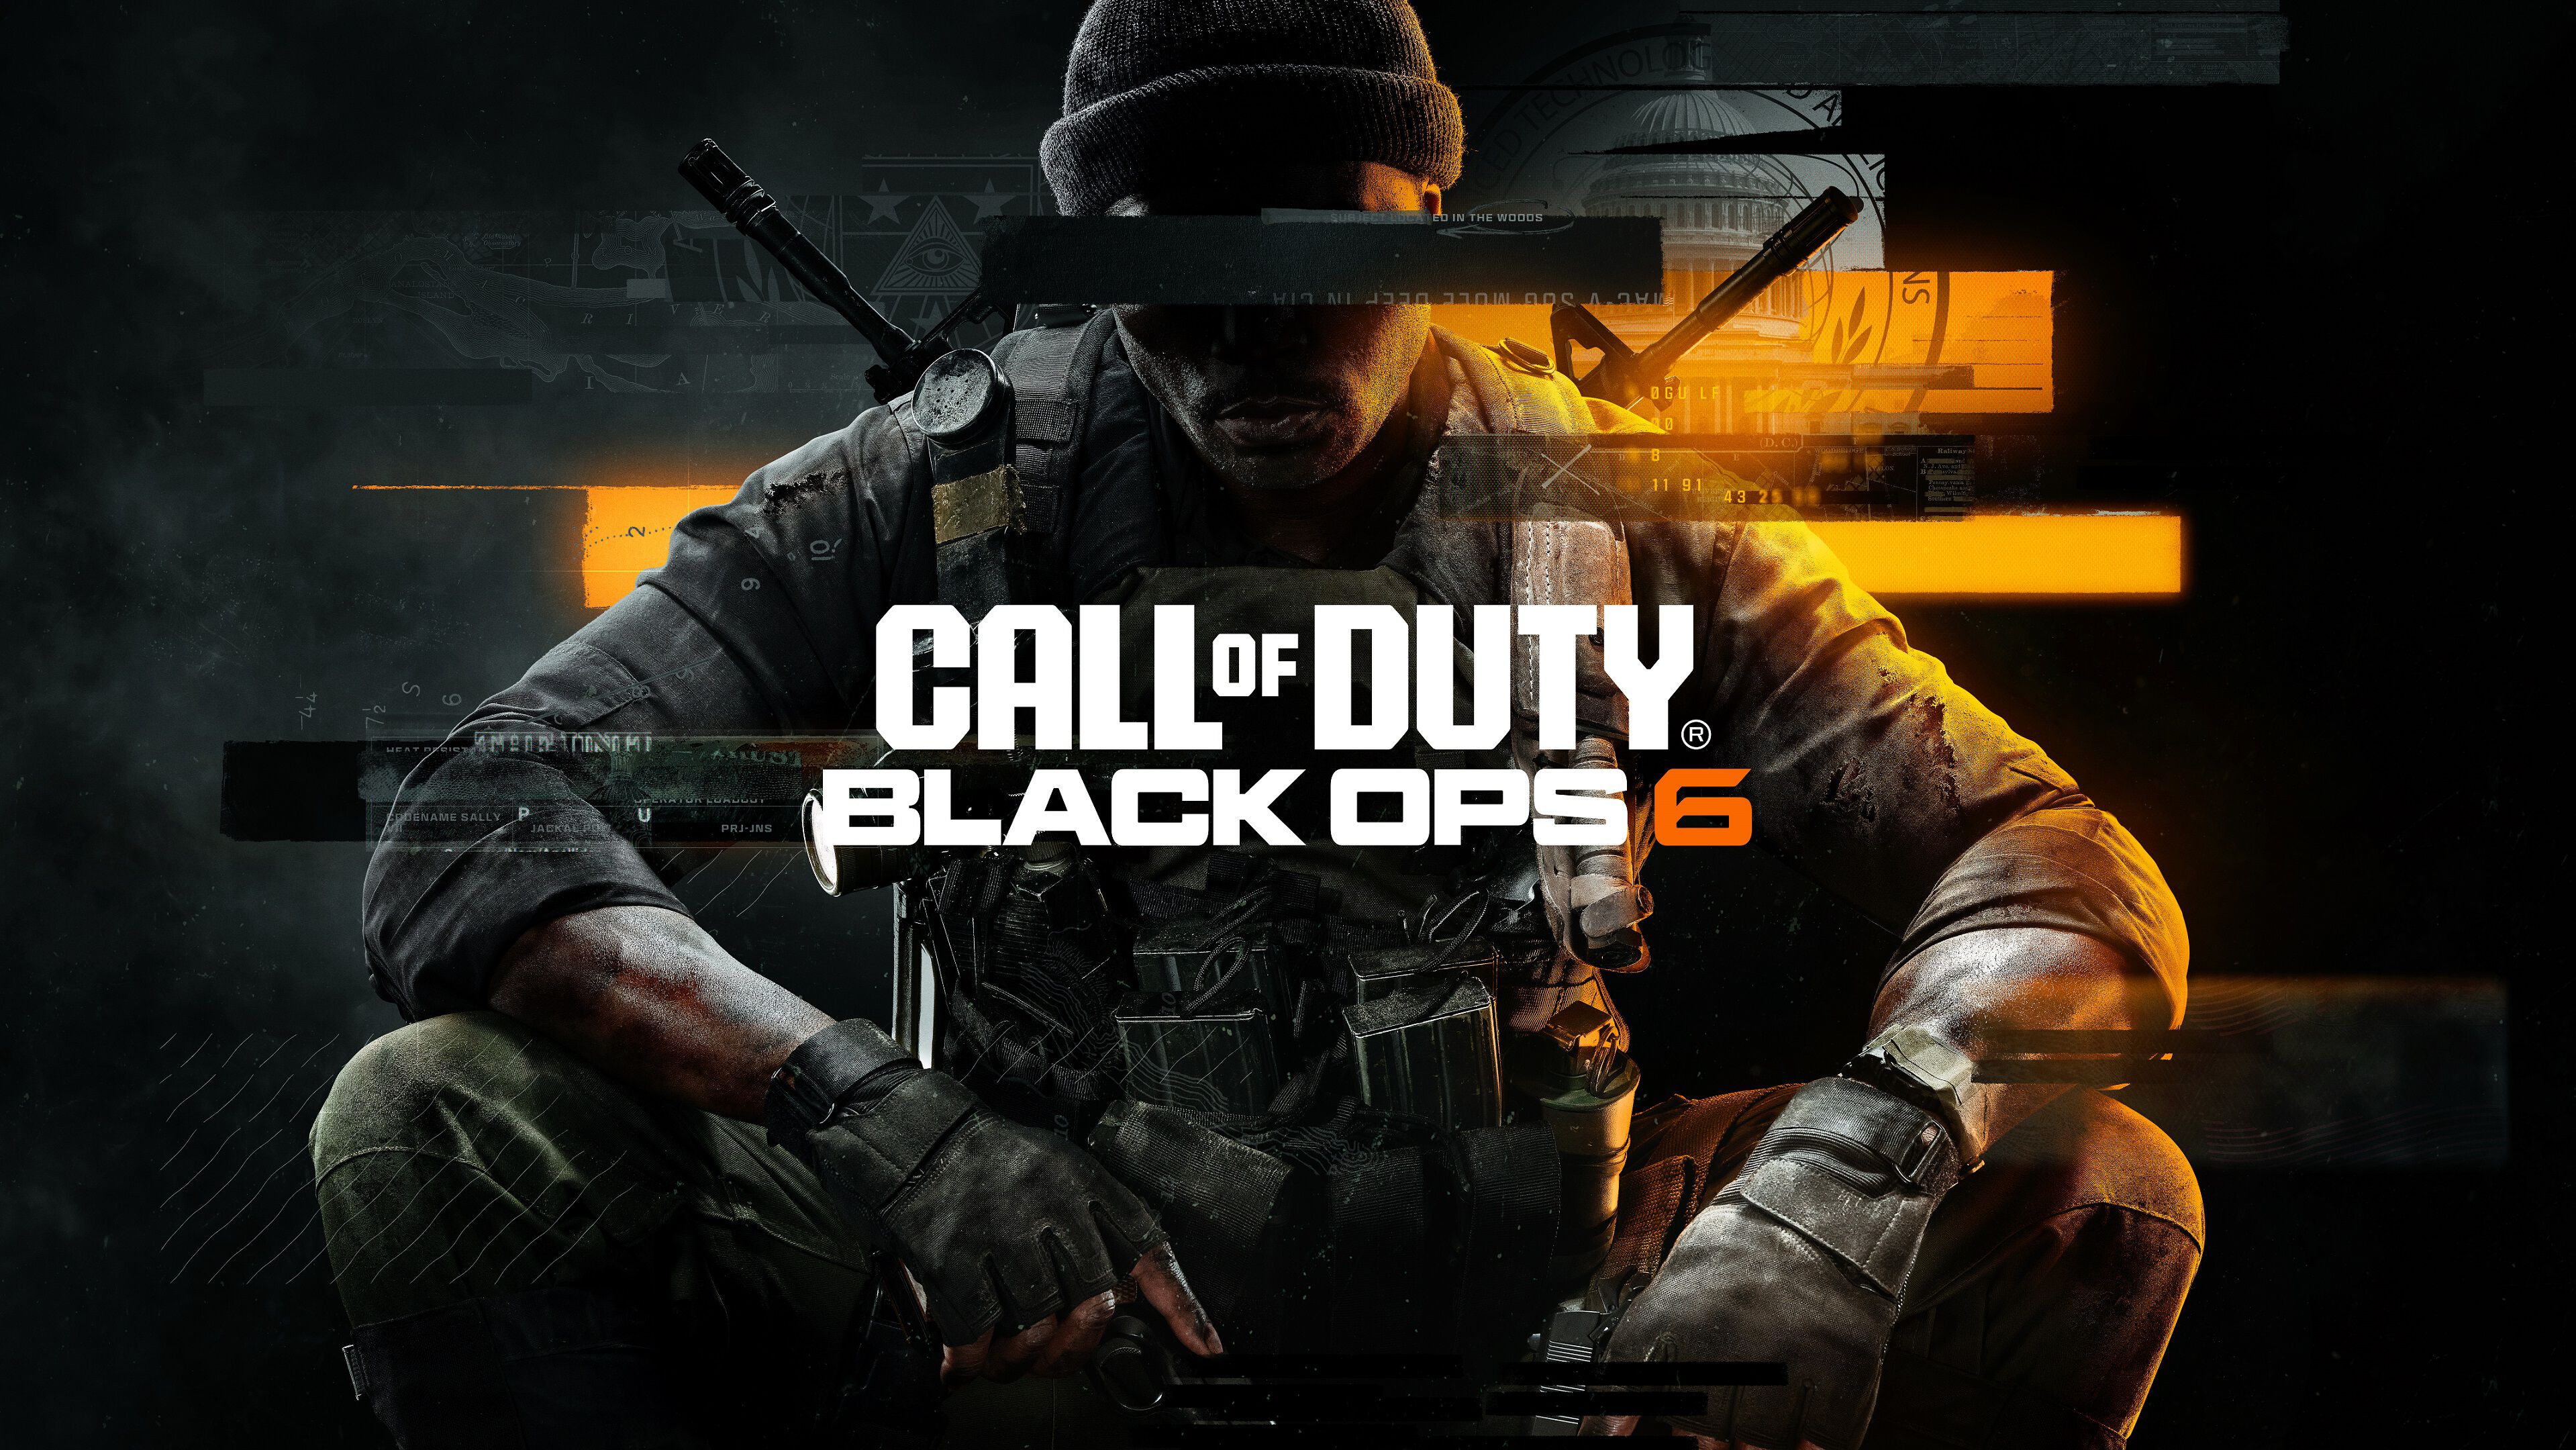 『Call of Duty: Black Ops 6』10月25日発売決定！ エイムをしながら全方向に走れる革新的な”オムニムーブメント”システムは戦闘をさらにスピーディーに。Treyarchスタジオ取材で判明した最新情報をまとめてお届け